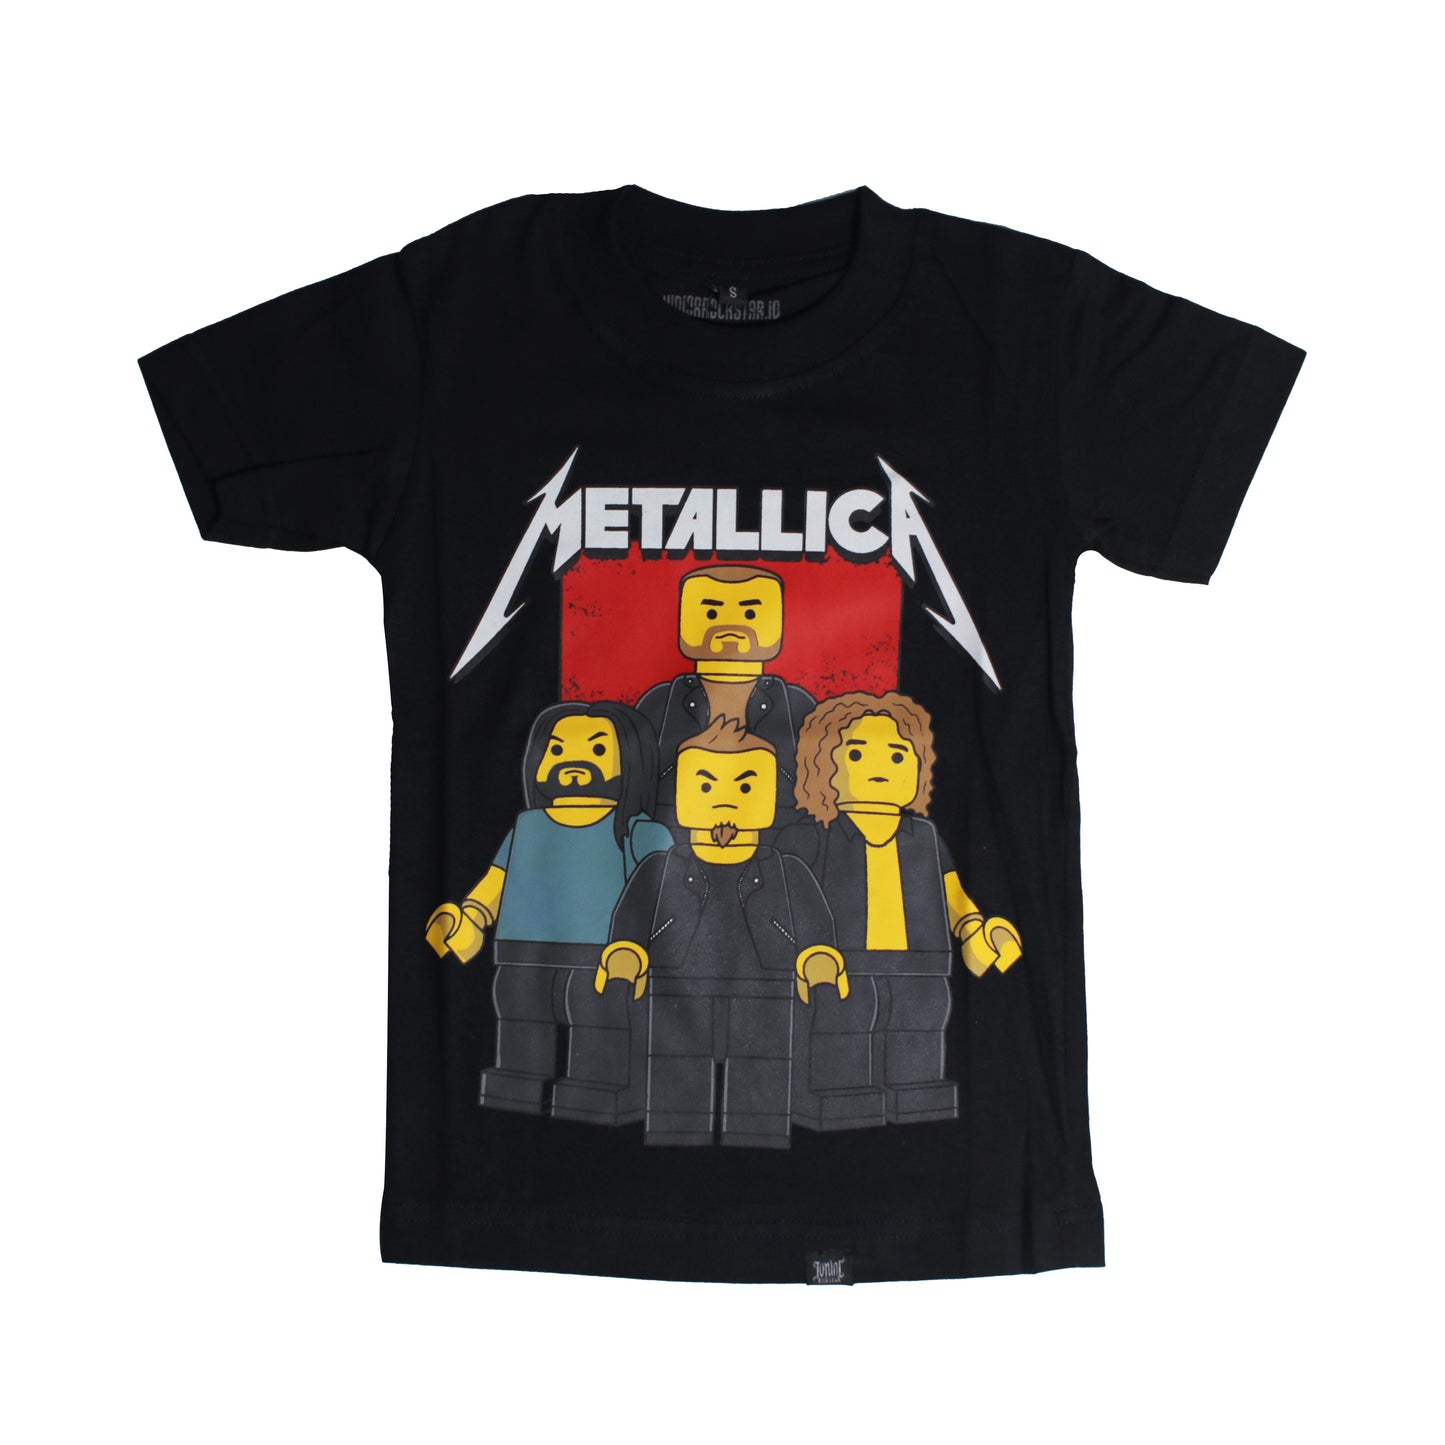 Baju Anak Kaos Band Metallica Lego